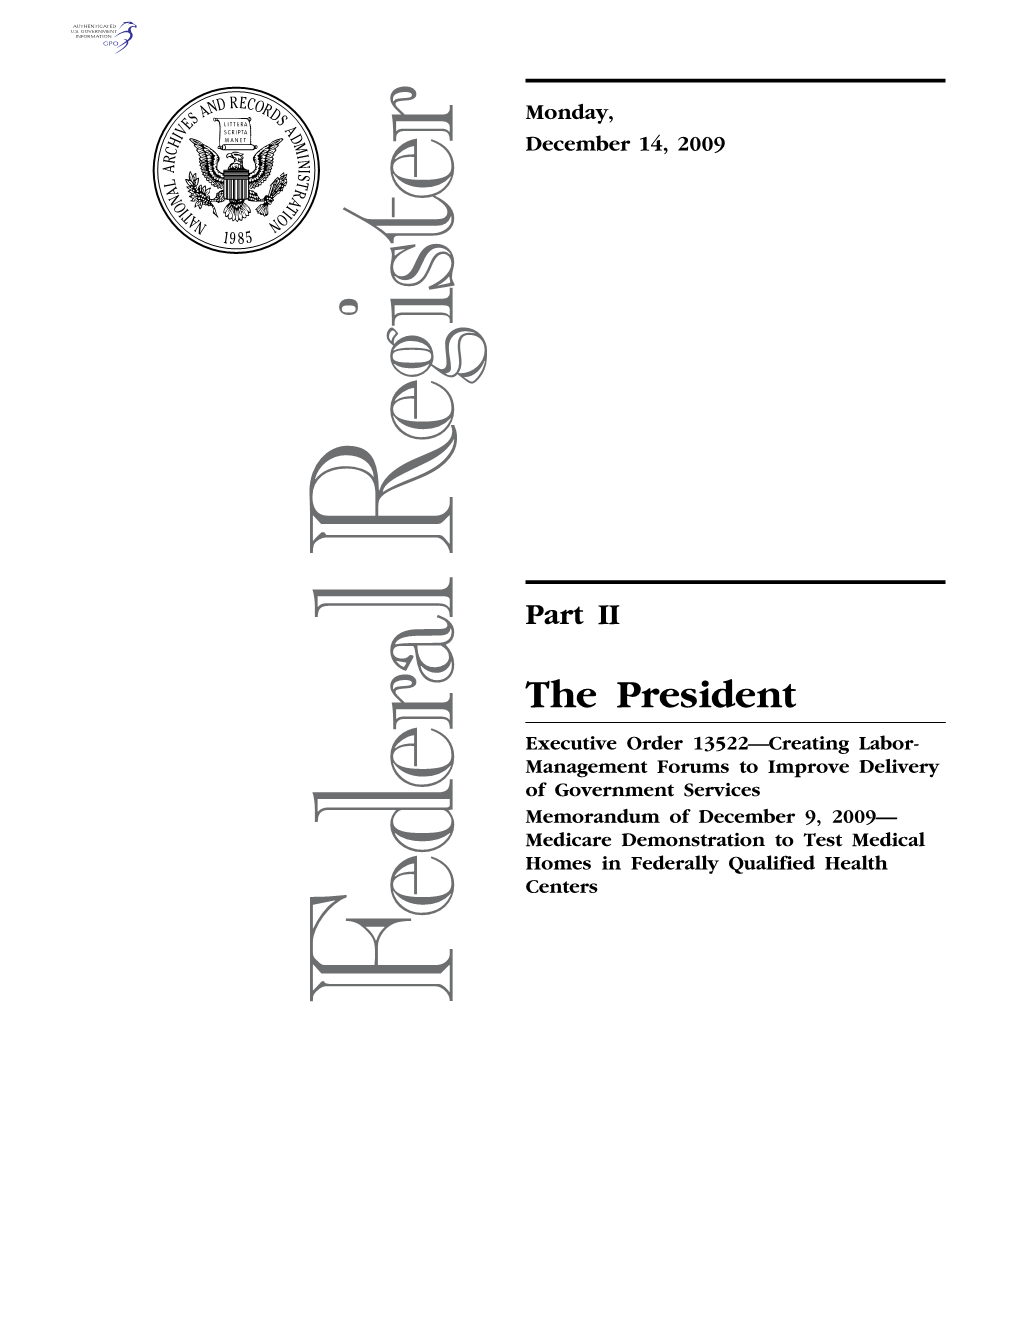 Executive Order 13522 of December 9, 2009